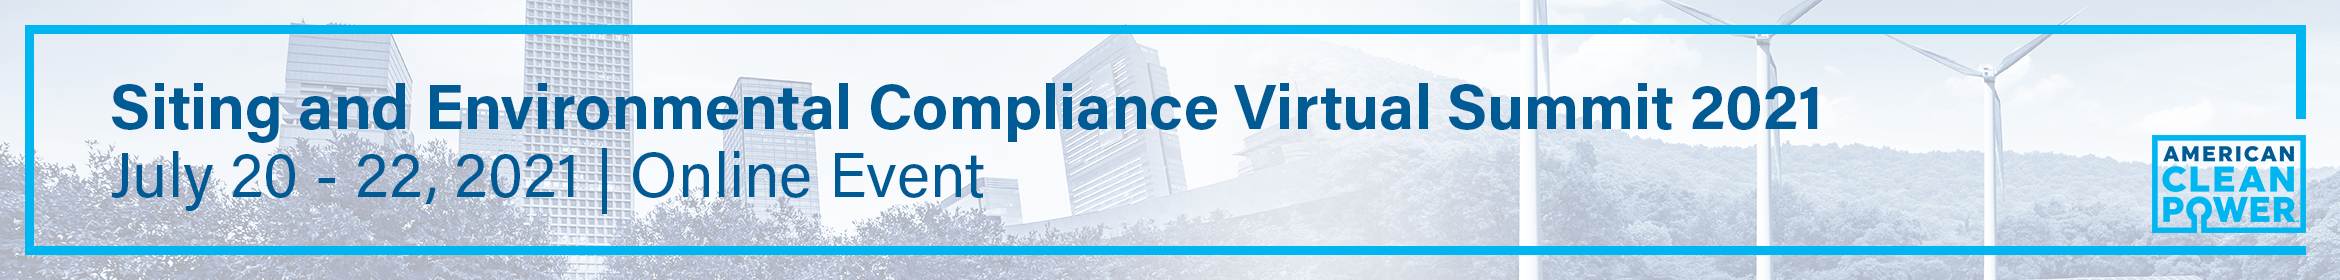 Siting and Environmental Compliance Virtual Summit 2021 Main banner